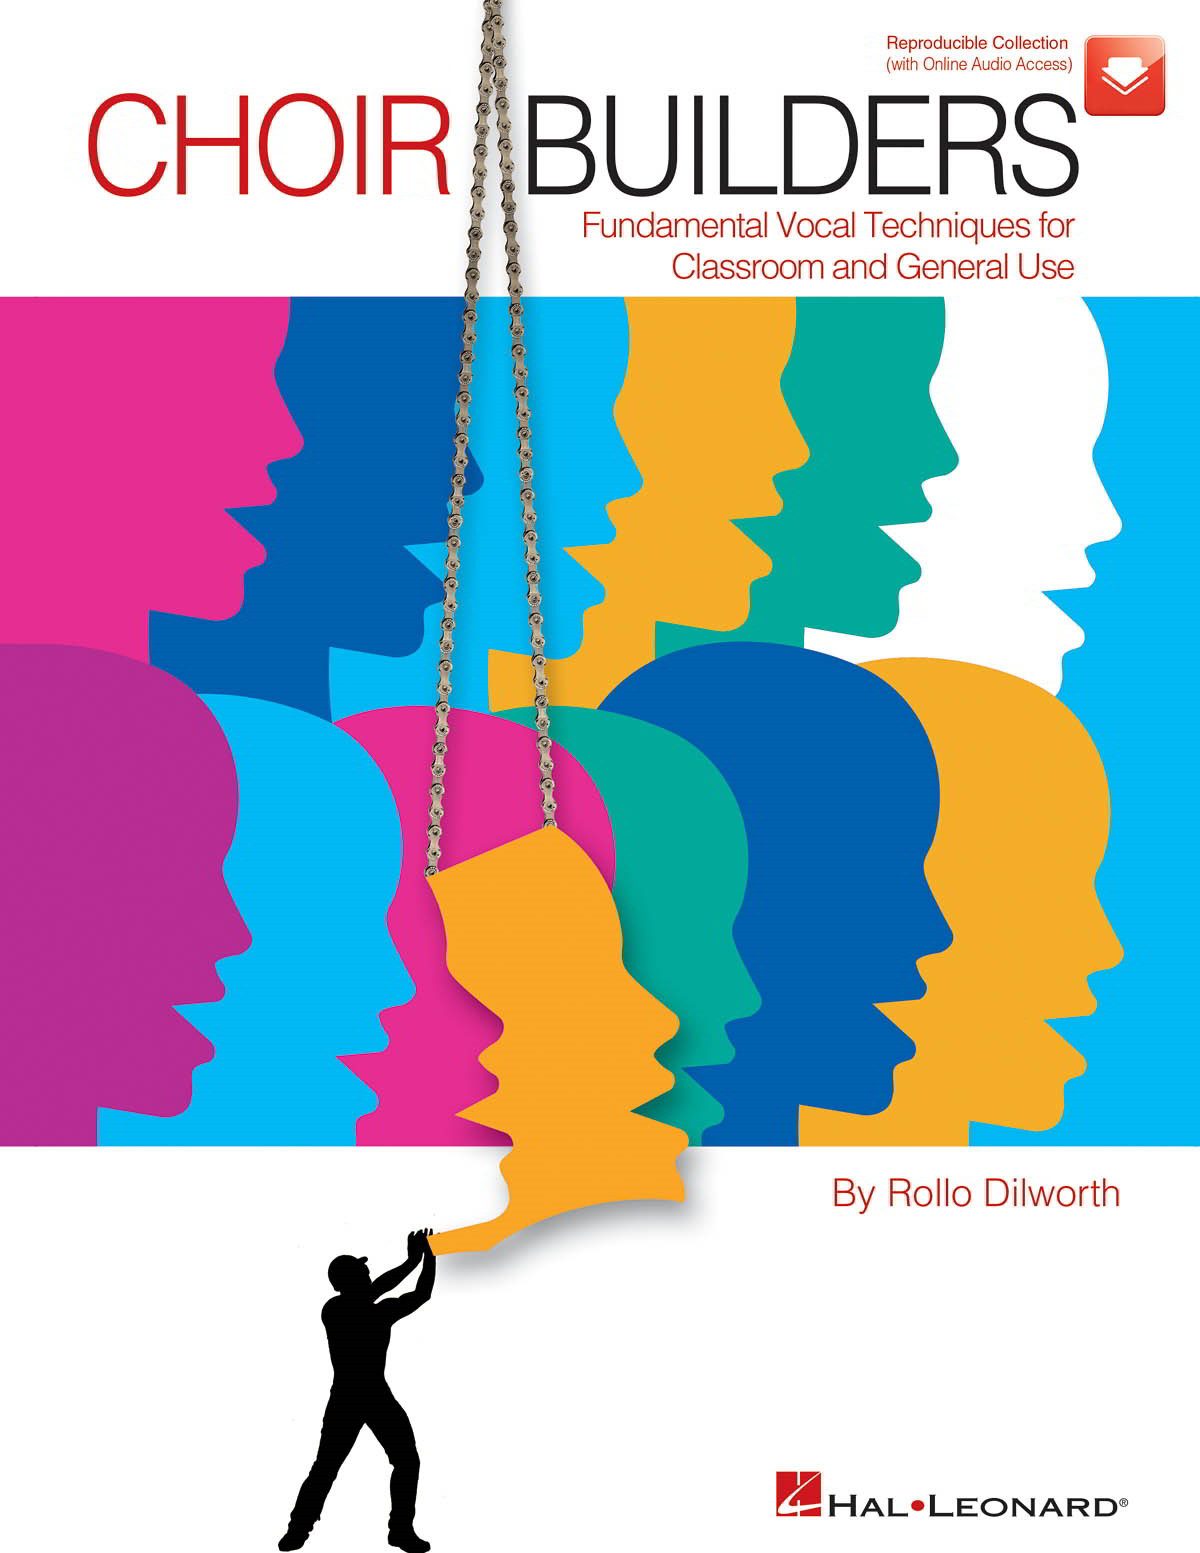 Choir Builders published by Hal Leonard